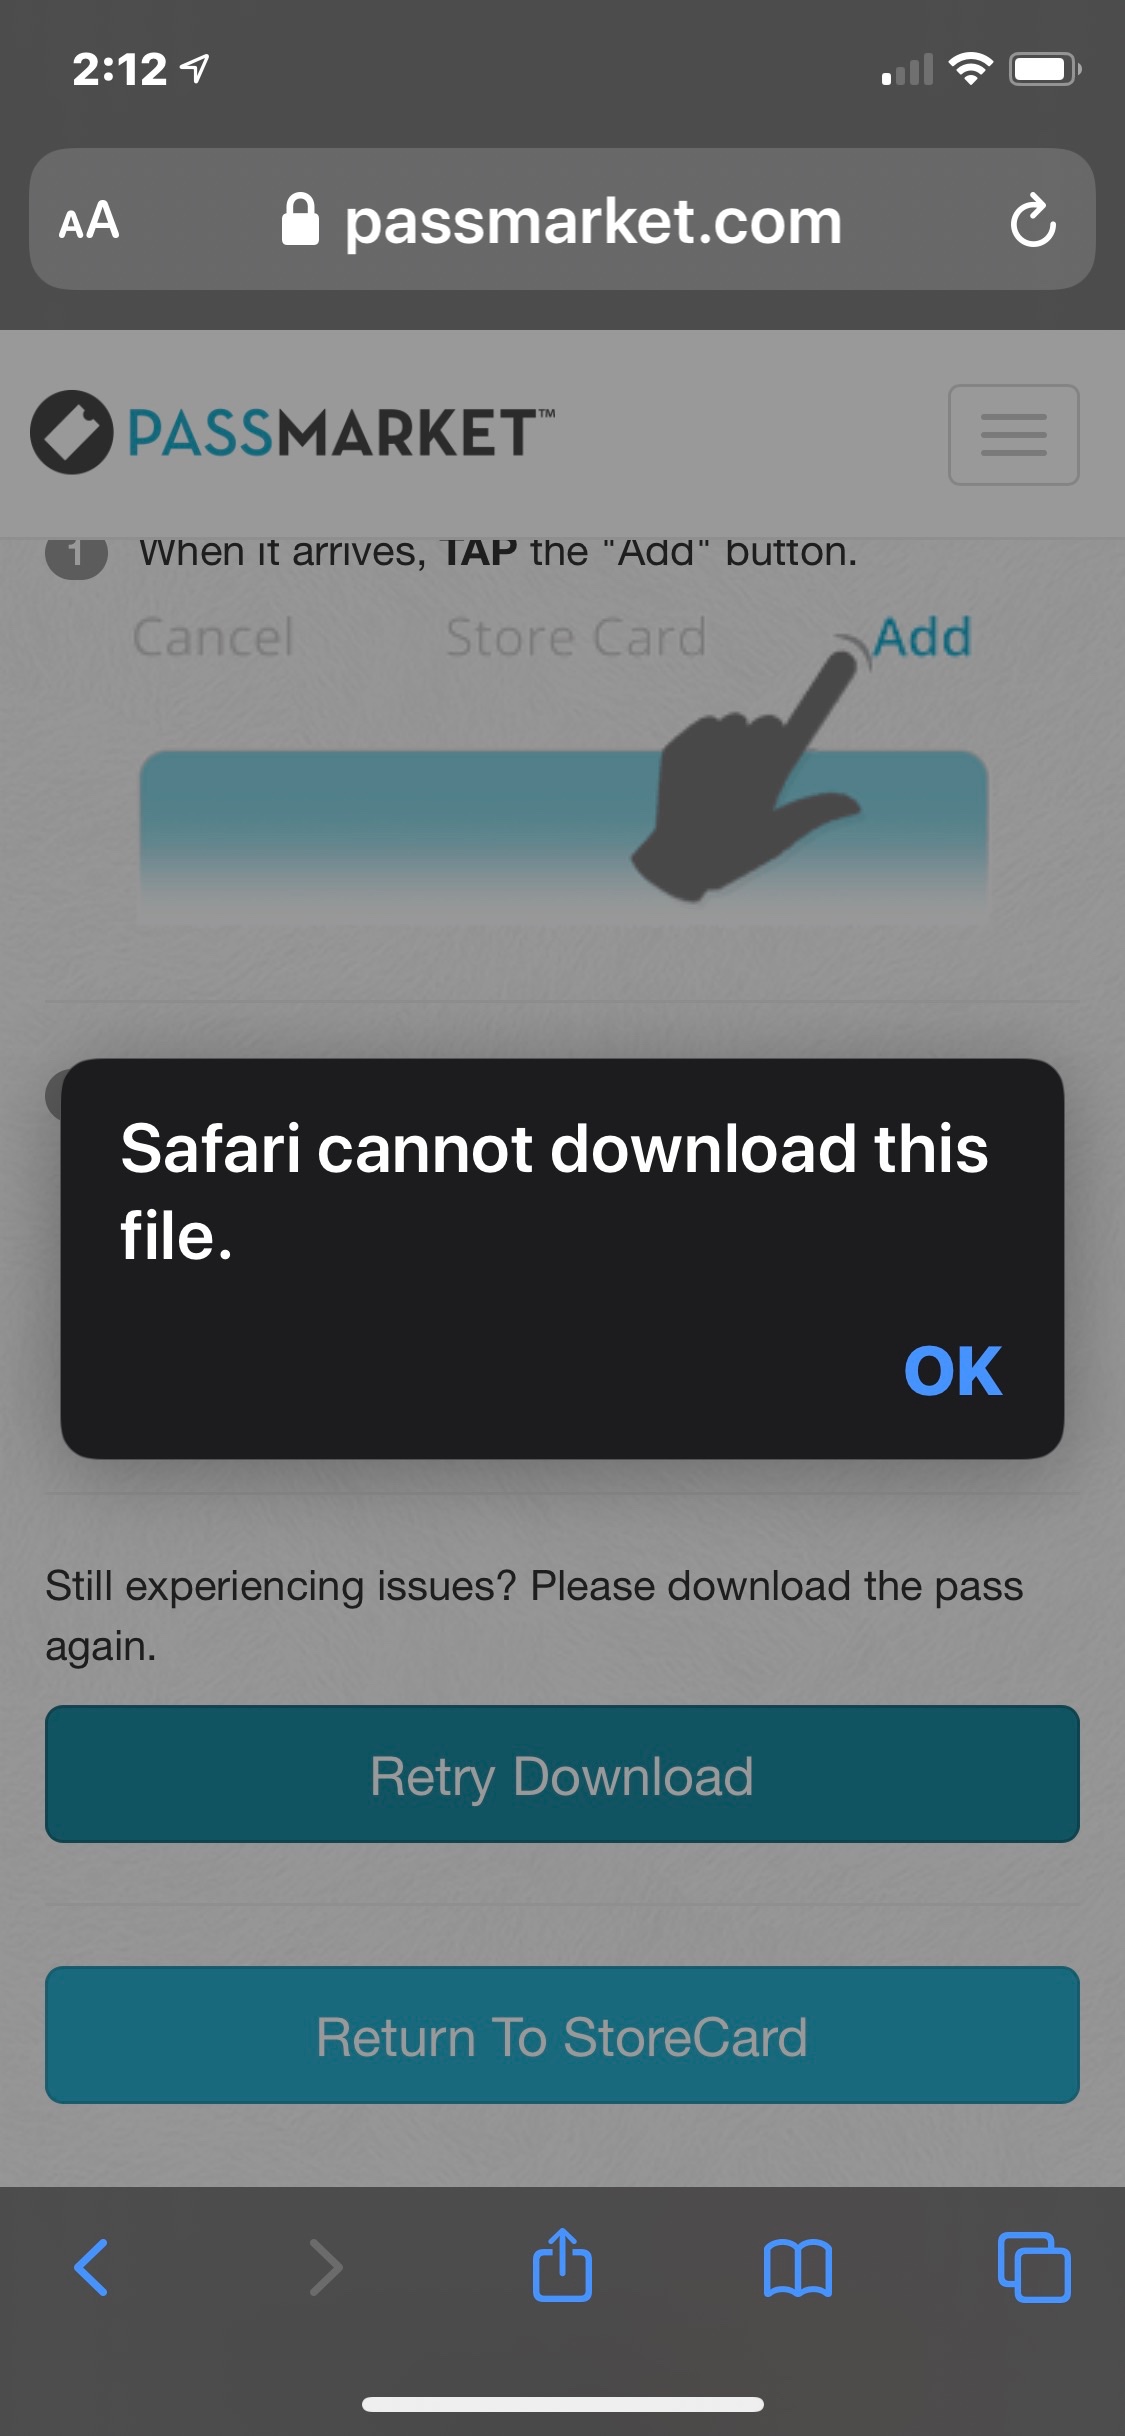 safari cannot download apple wallet file